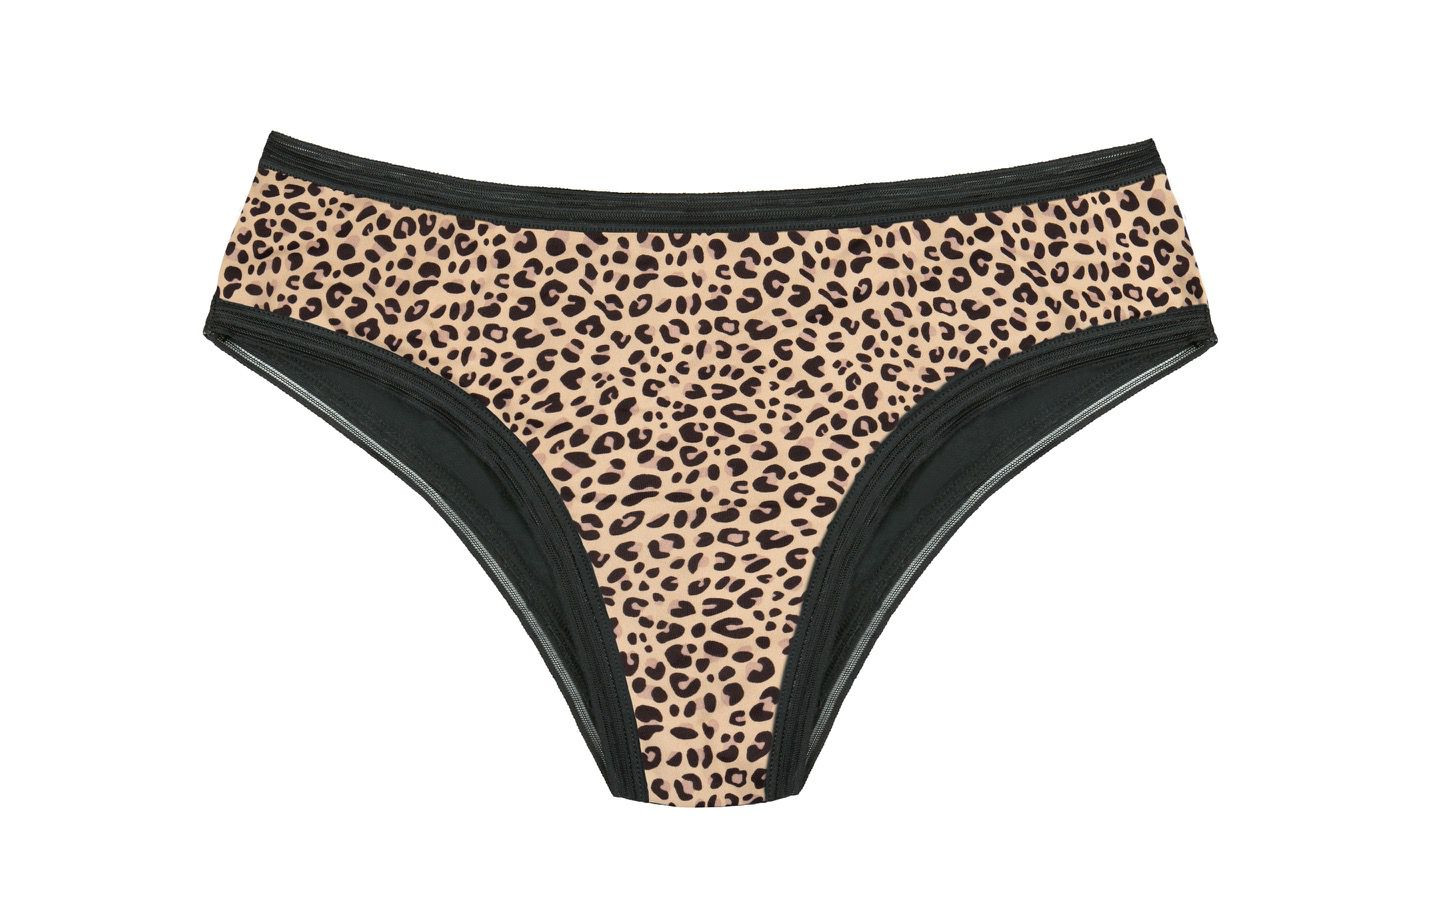 Thinx Period-Proof Underwear | Green Product Award